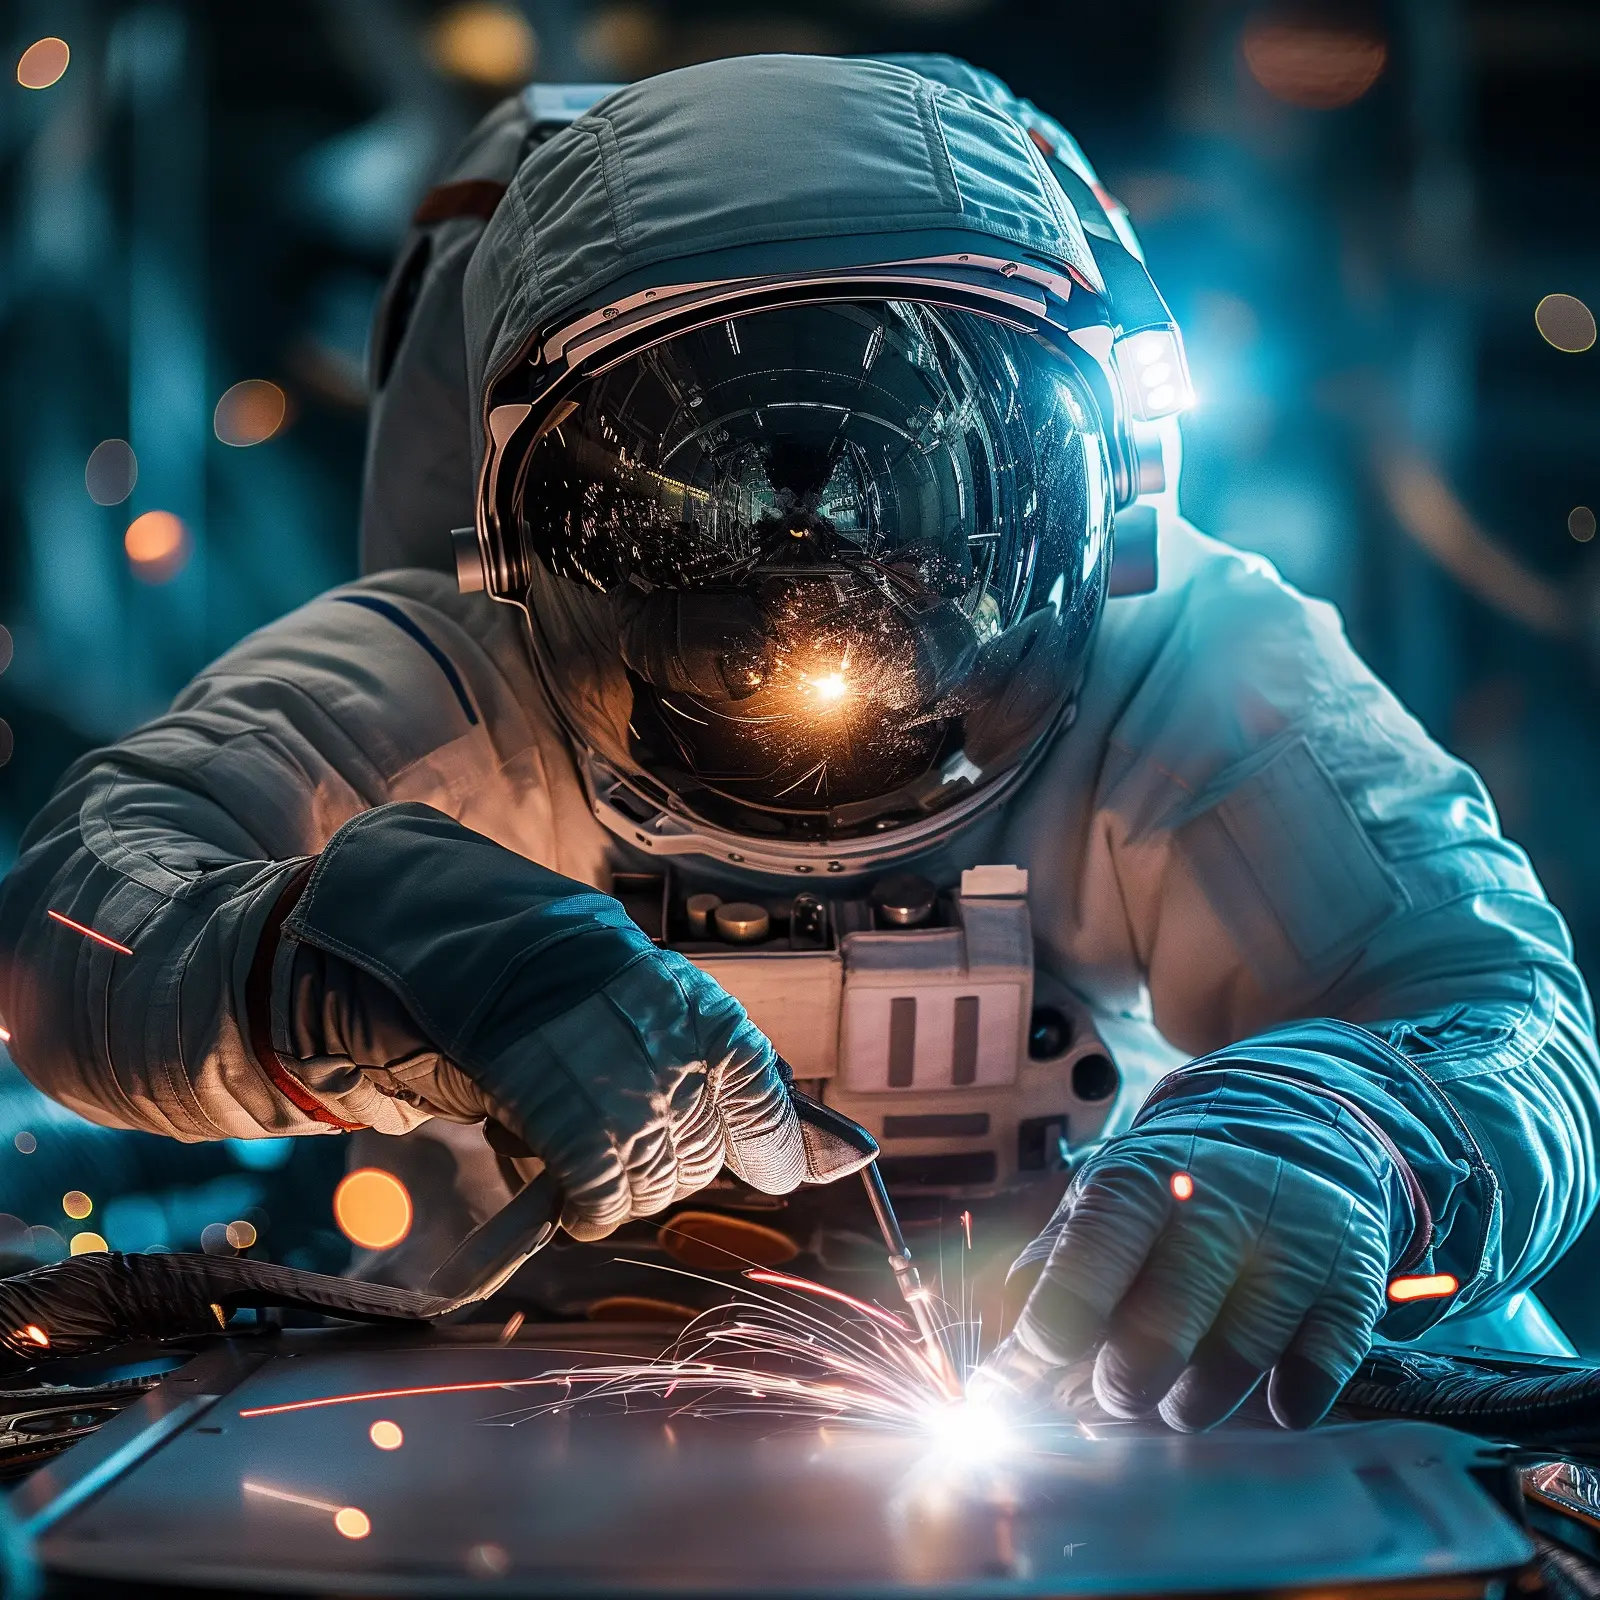 Astronaut welding on a metal plate